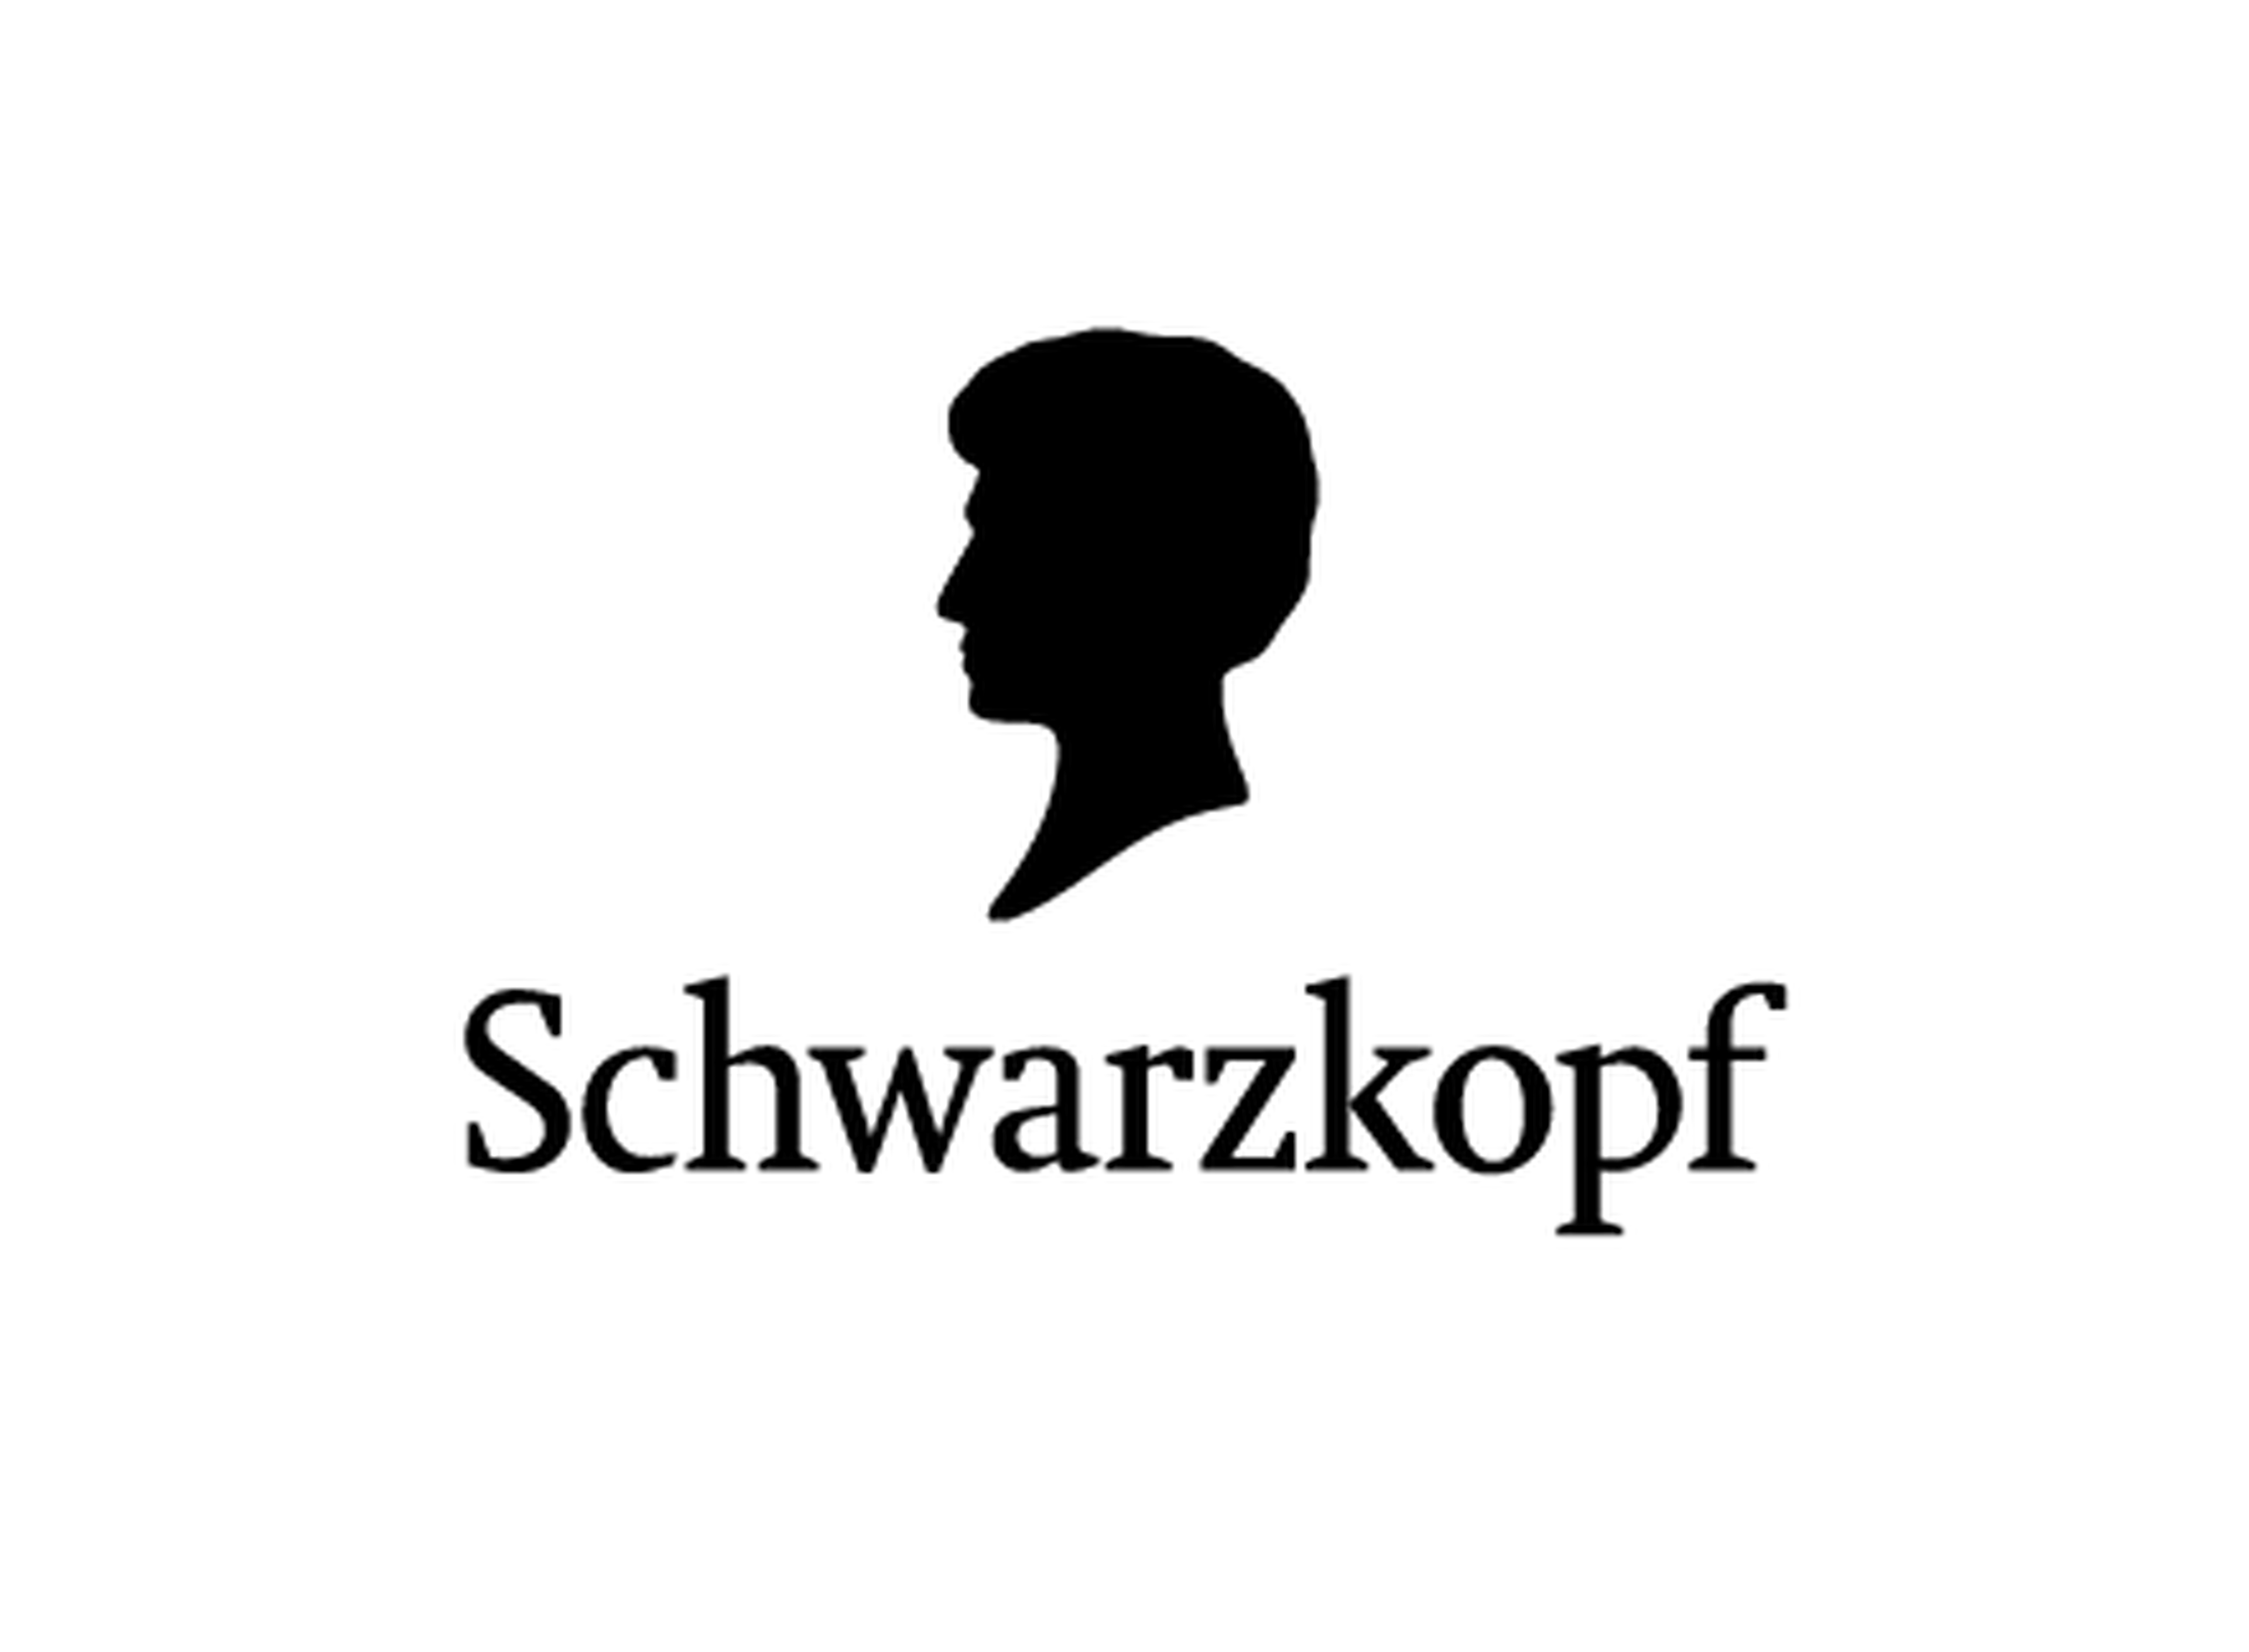 Schwarzkopf logotype